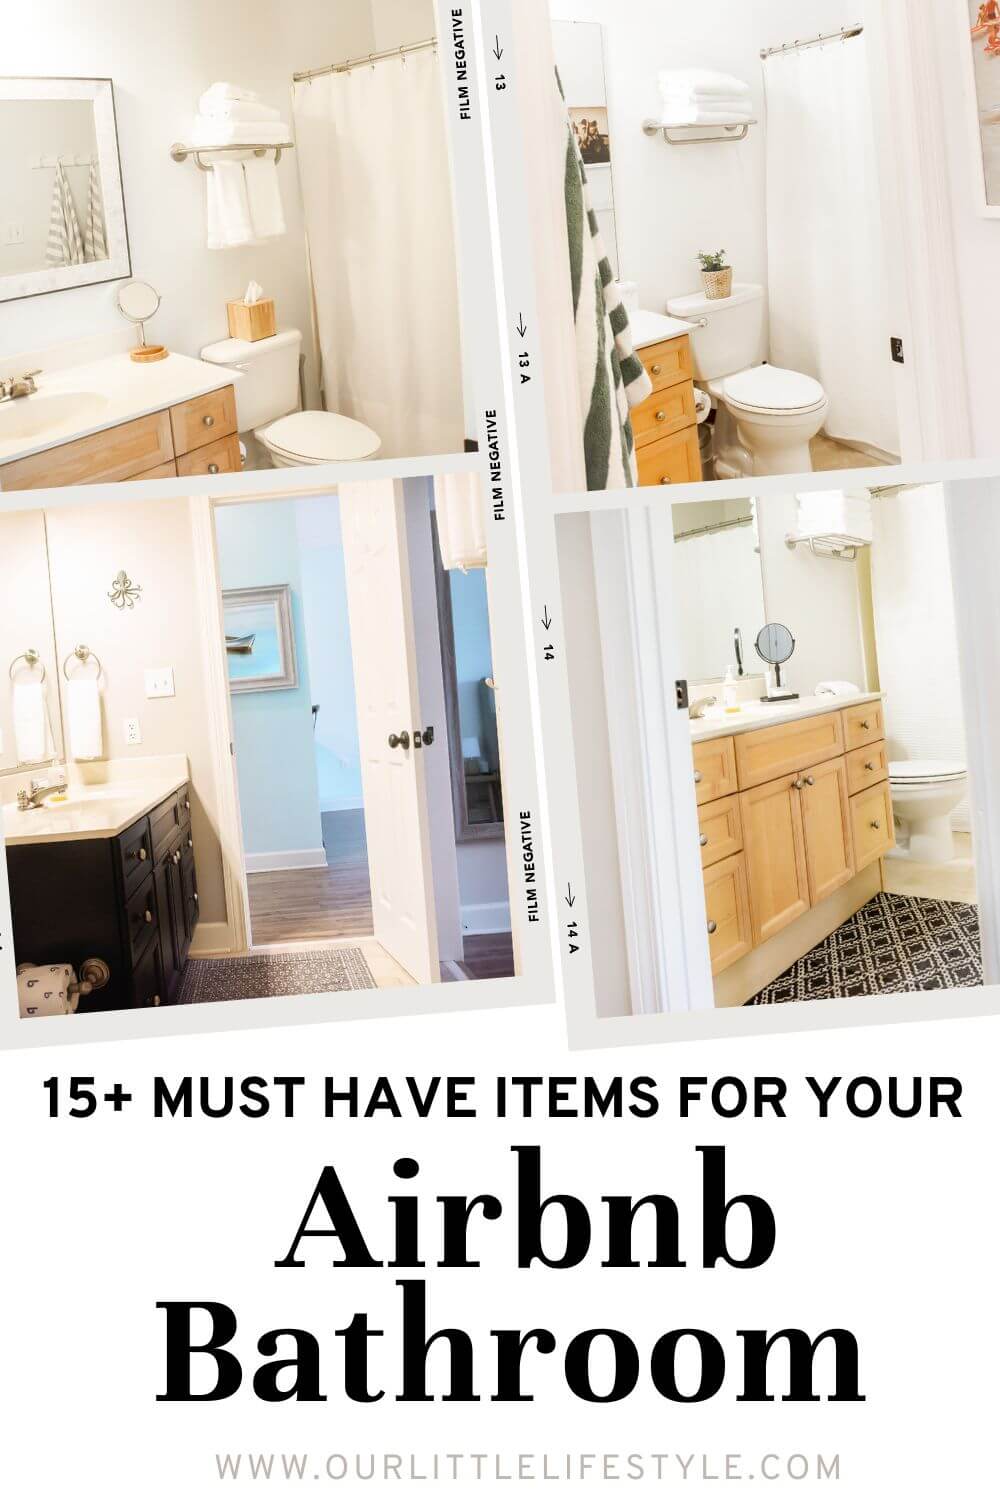 Airbnb Bath Room Items